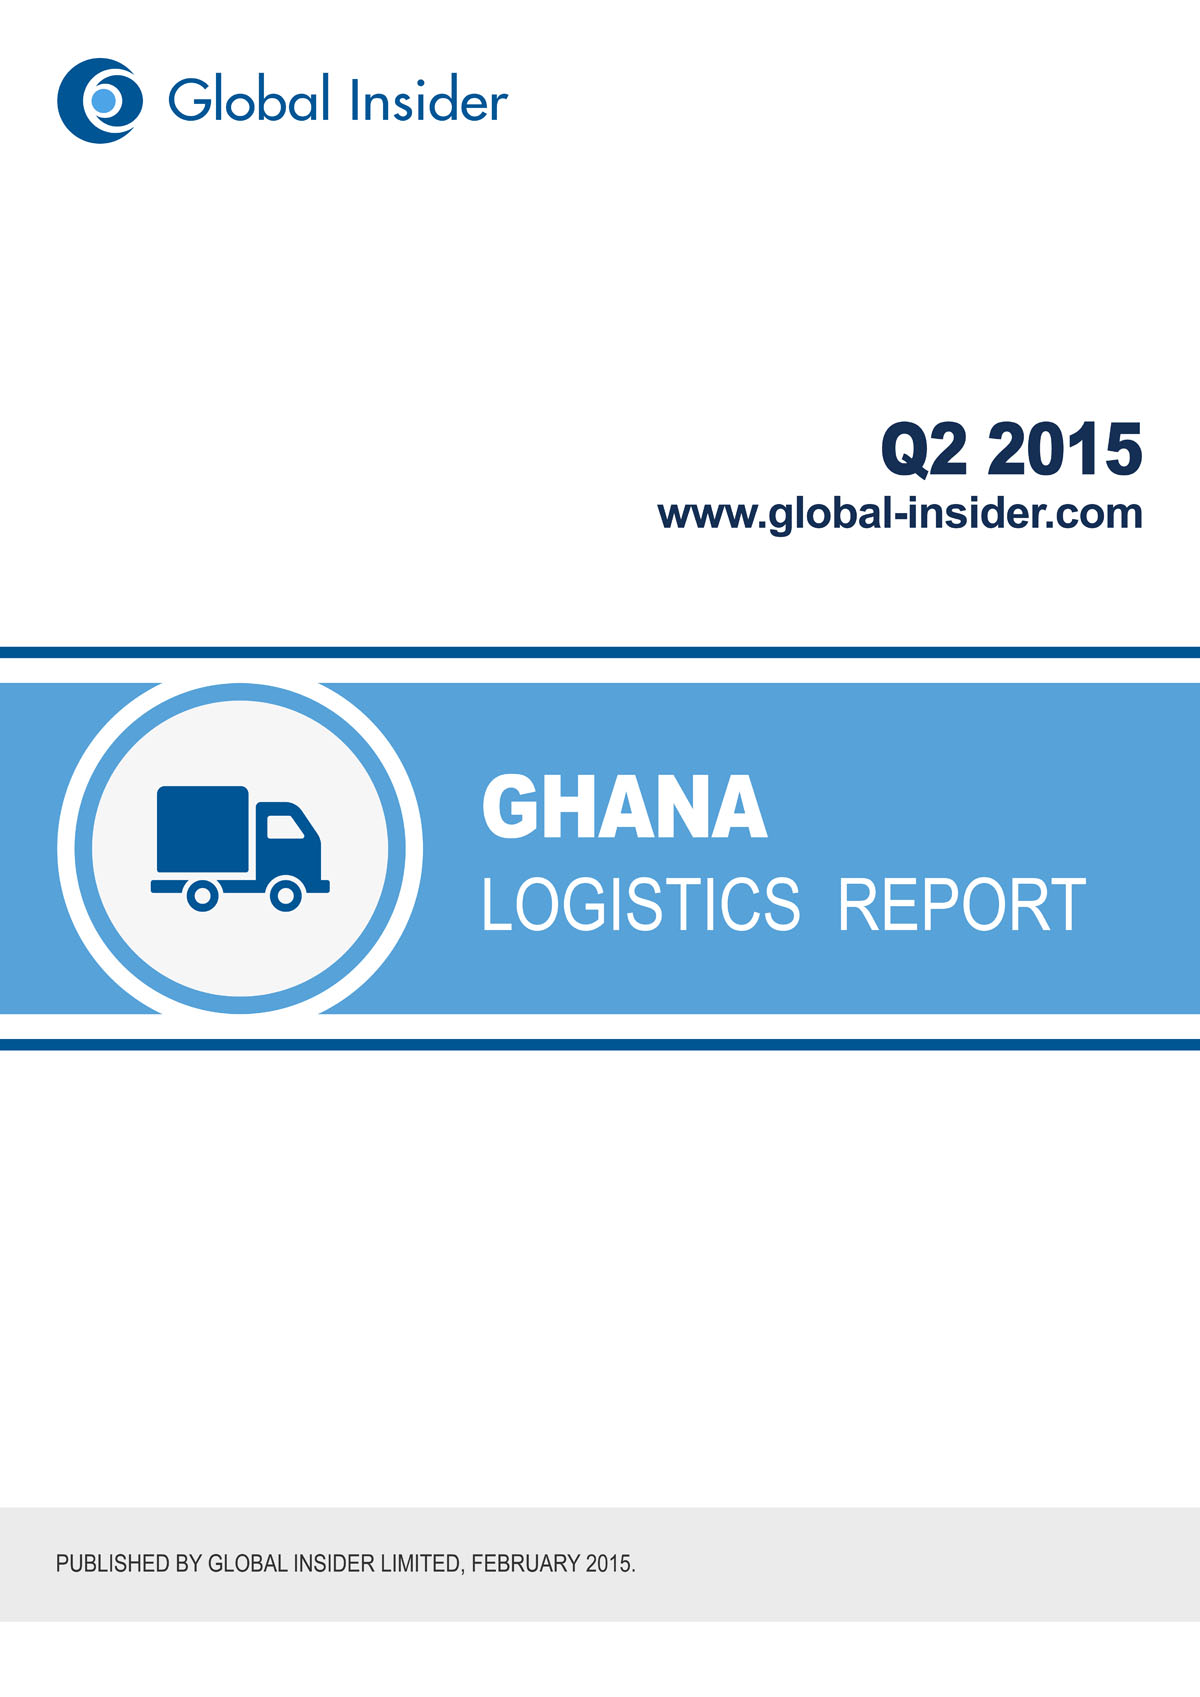 Ghana Logistics Report